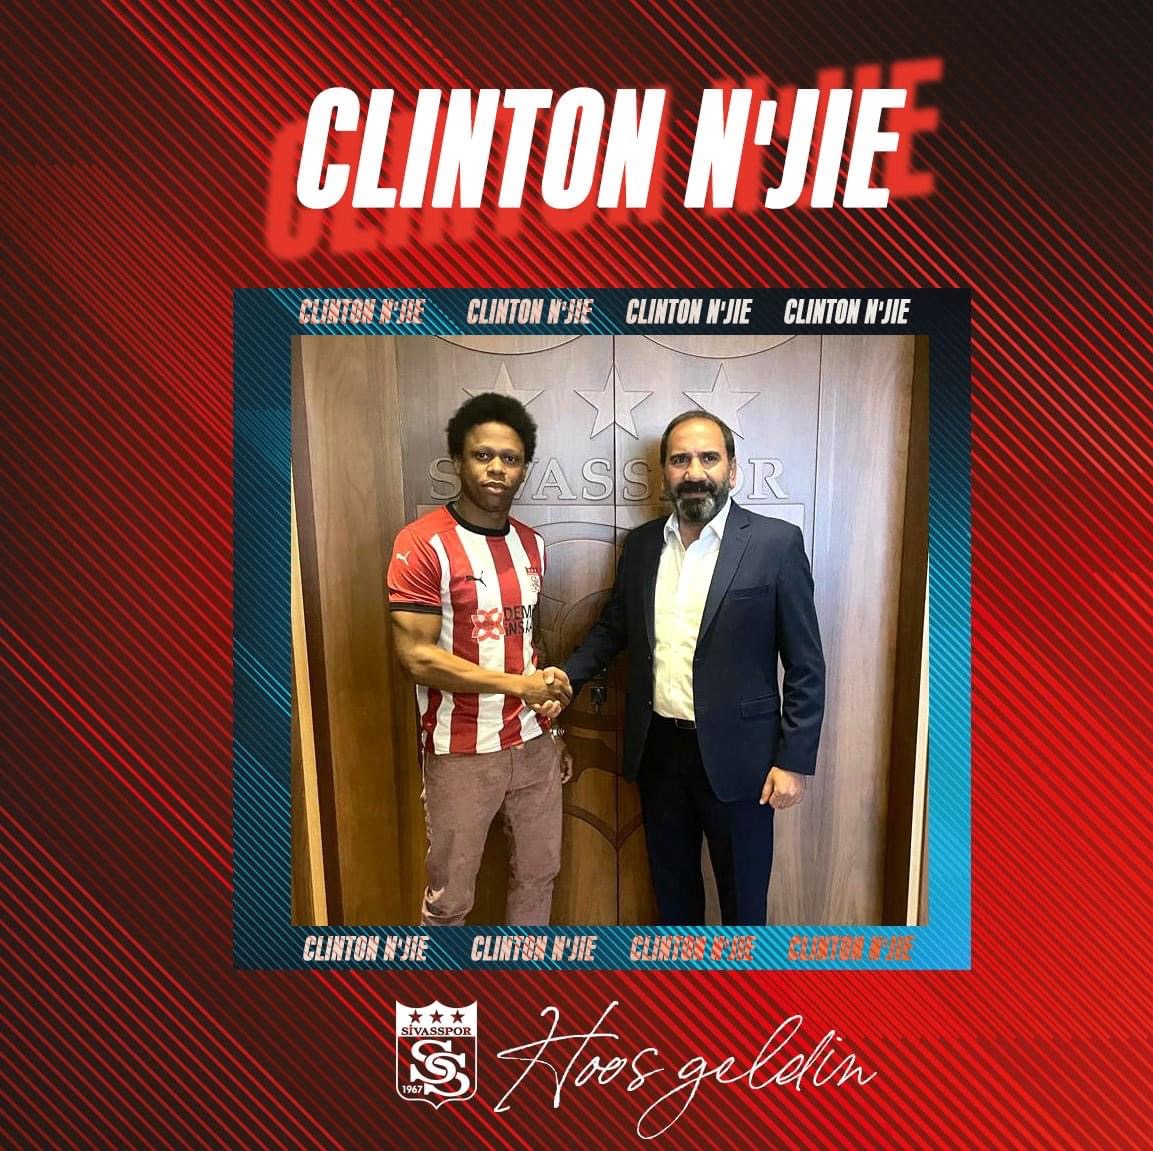 Njie Clinton signs with Sivasspor